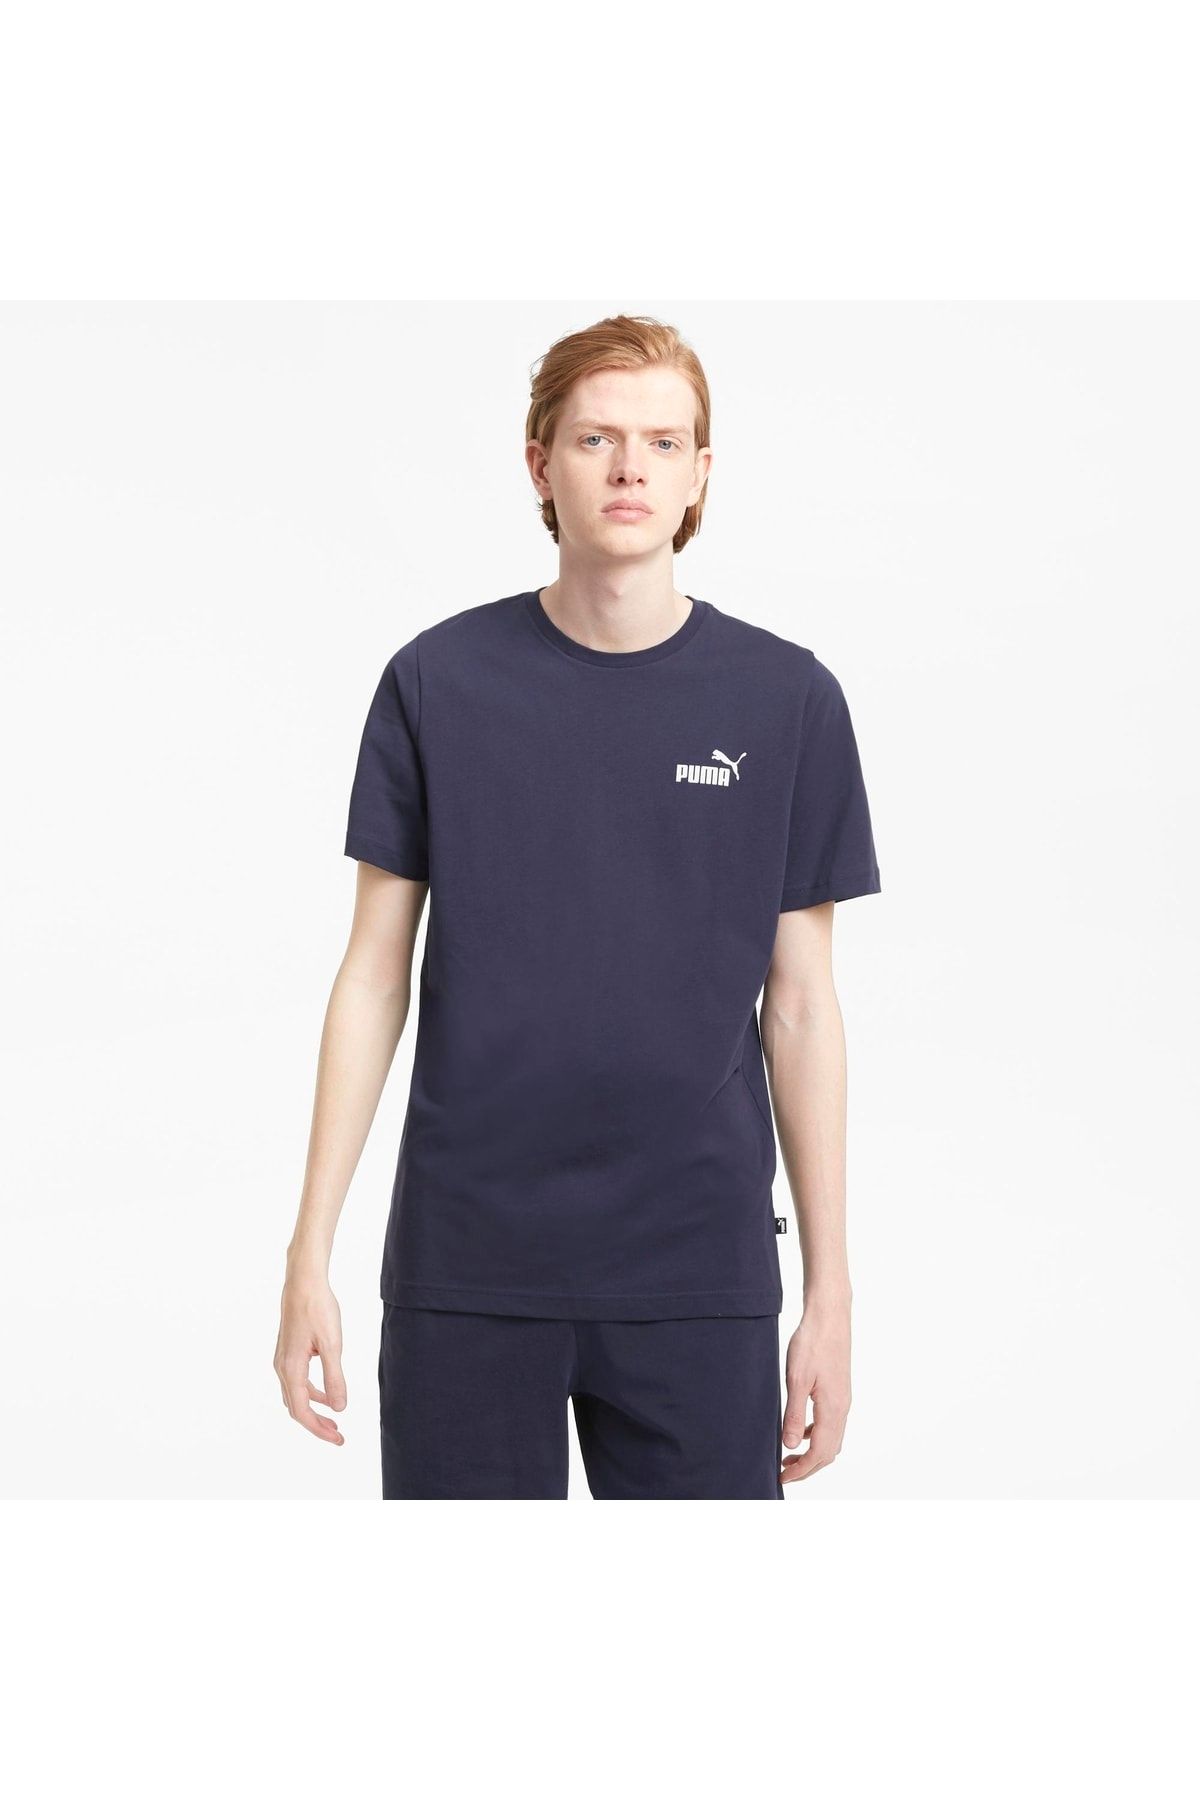 Puma ESS Small Logo Tee - Navy Blue Men's T-Shirt - Trendyol